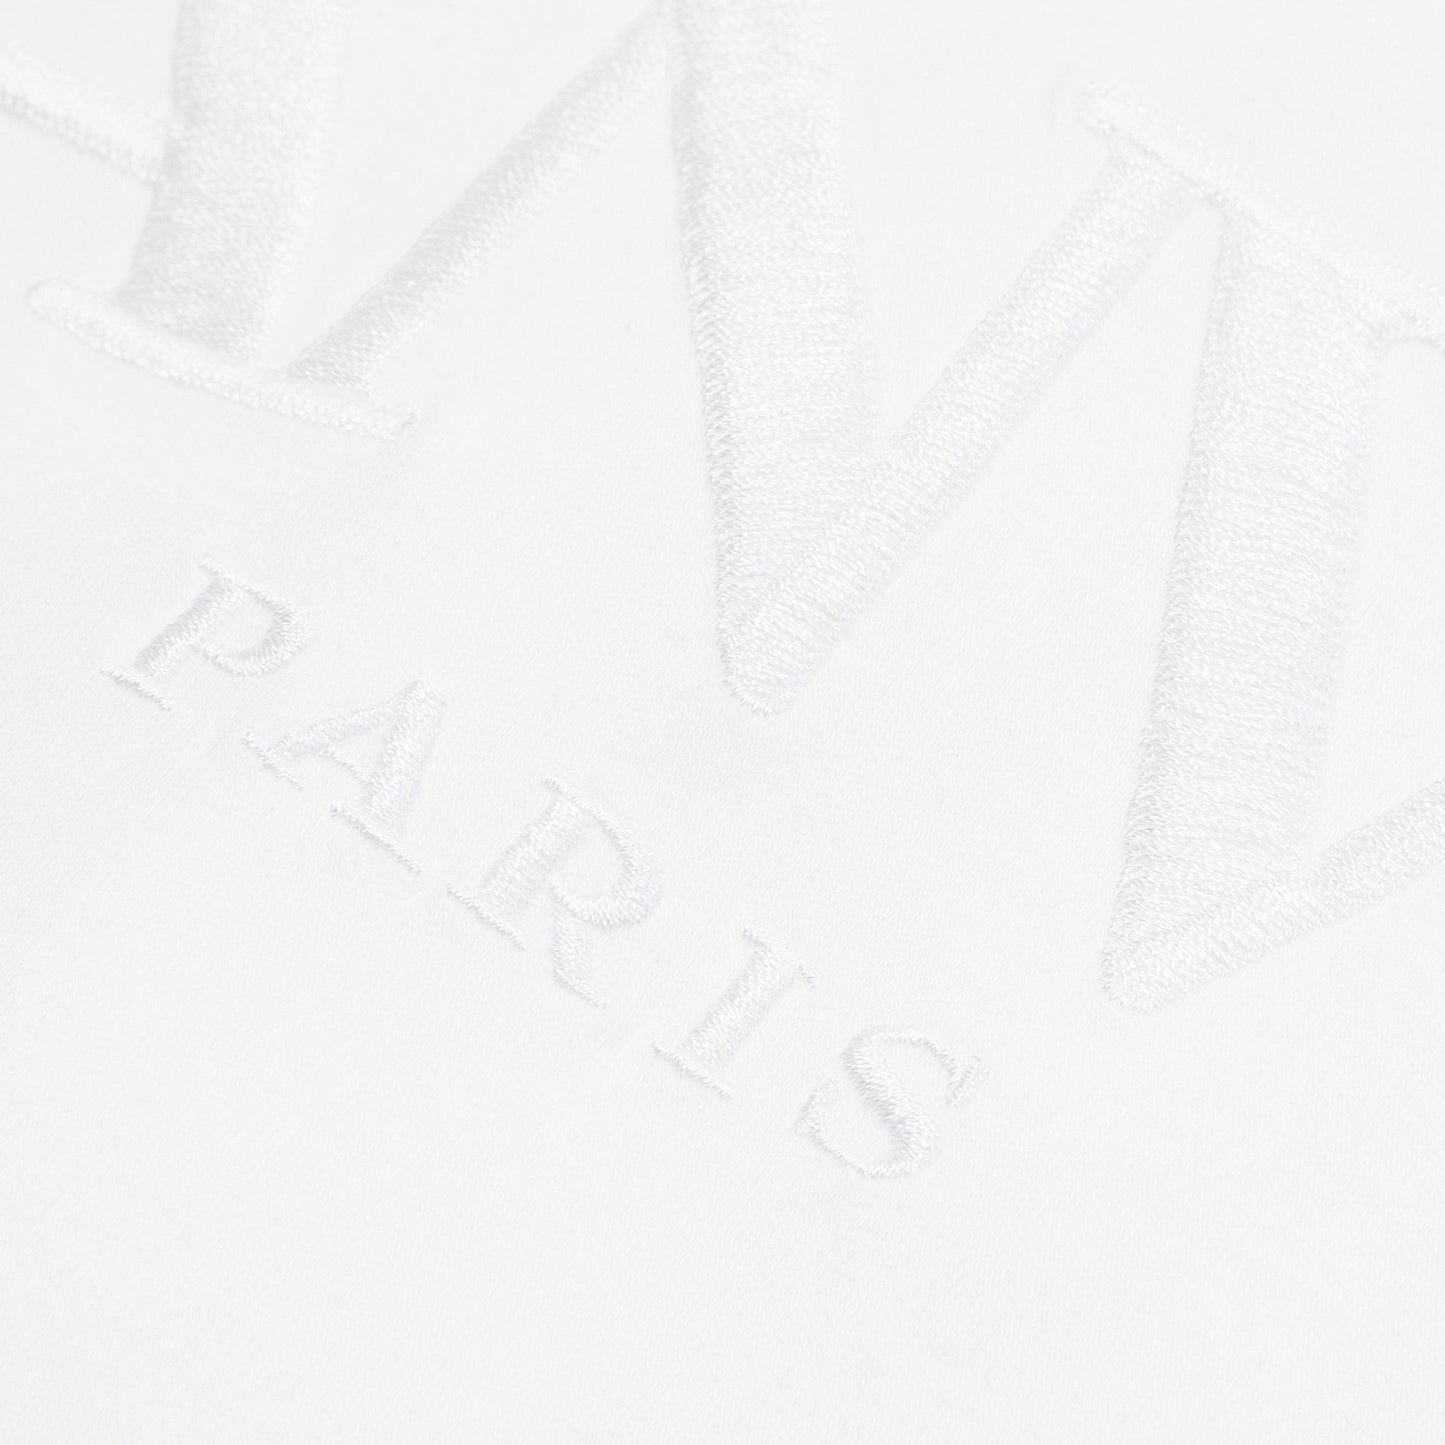 Lanvin Paris Classic T-Shirt (Optic White)